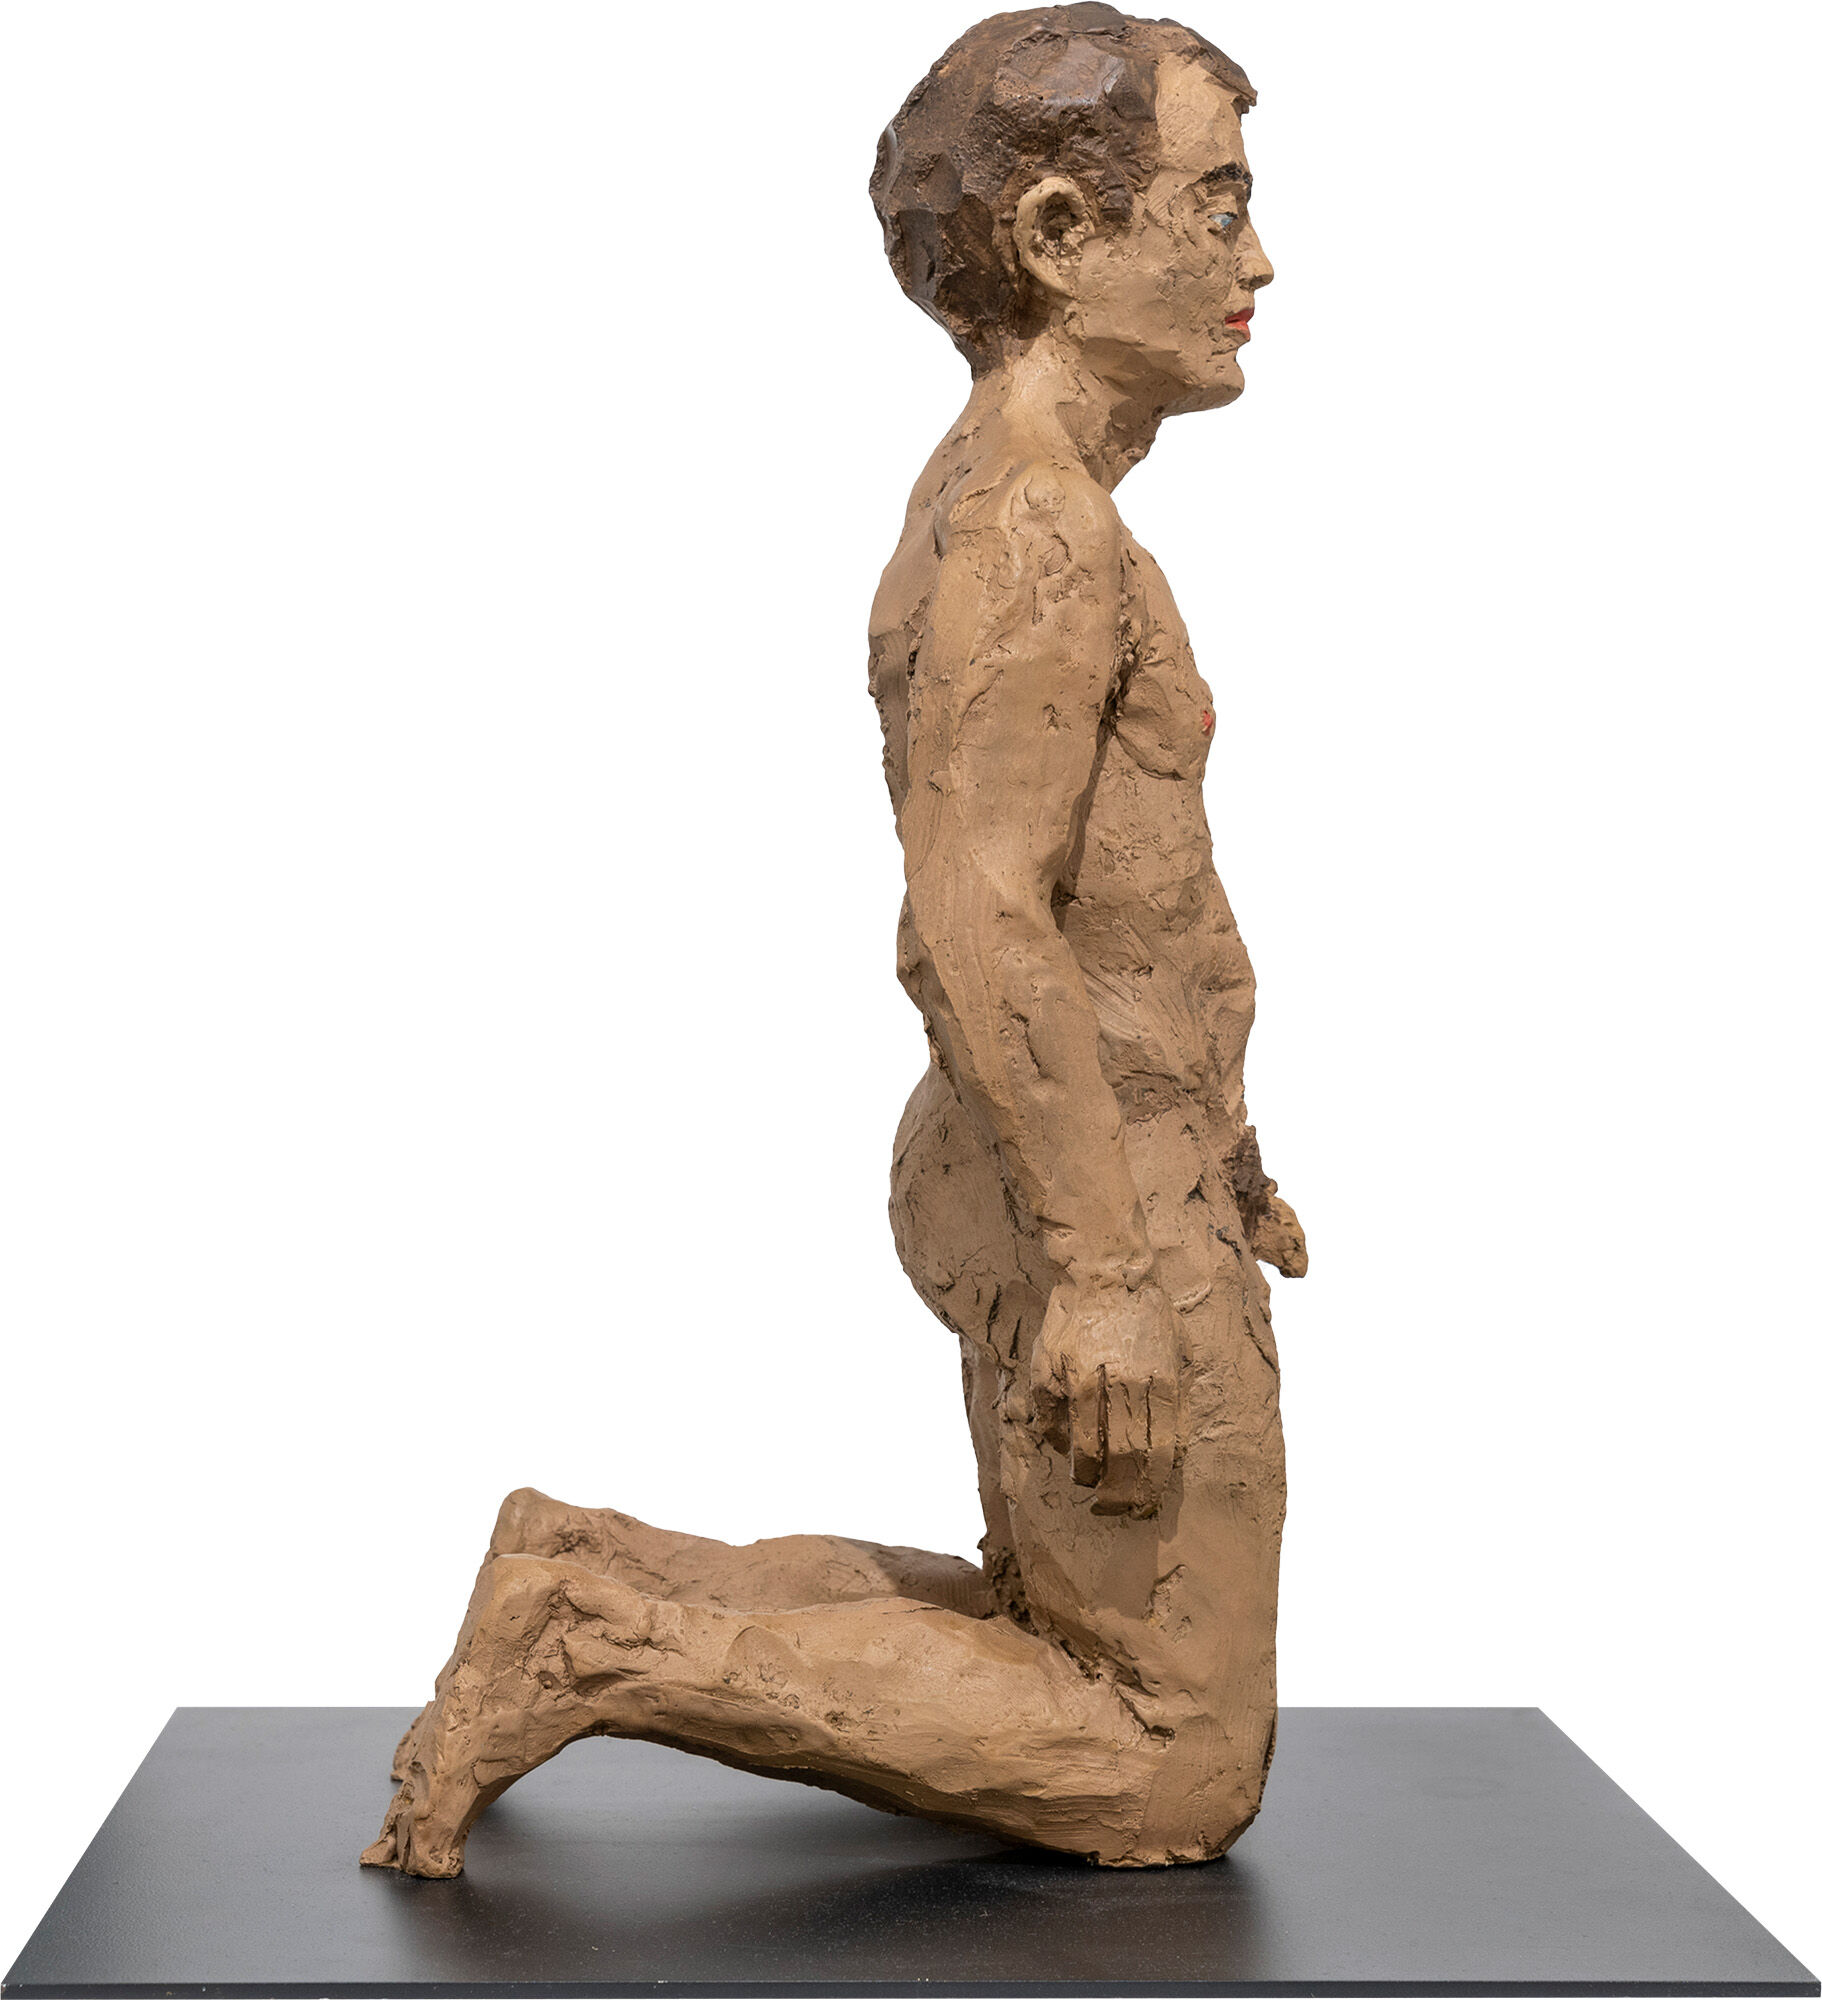 Sculpture "Kneeling Man" (2012), bronze by Stephan Balkenhol